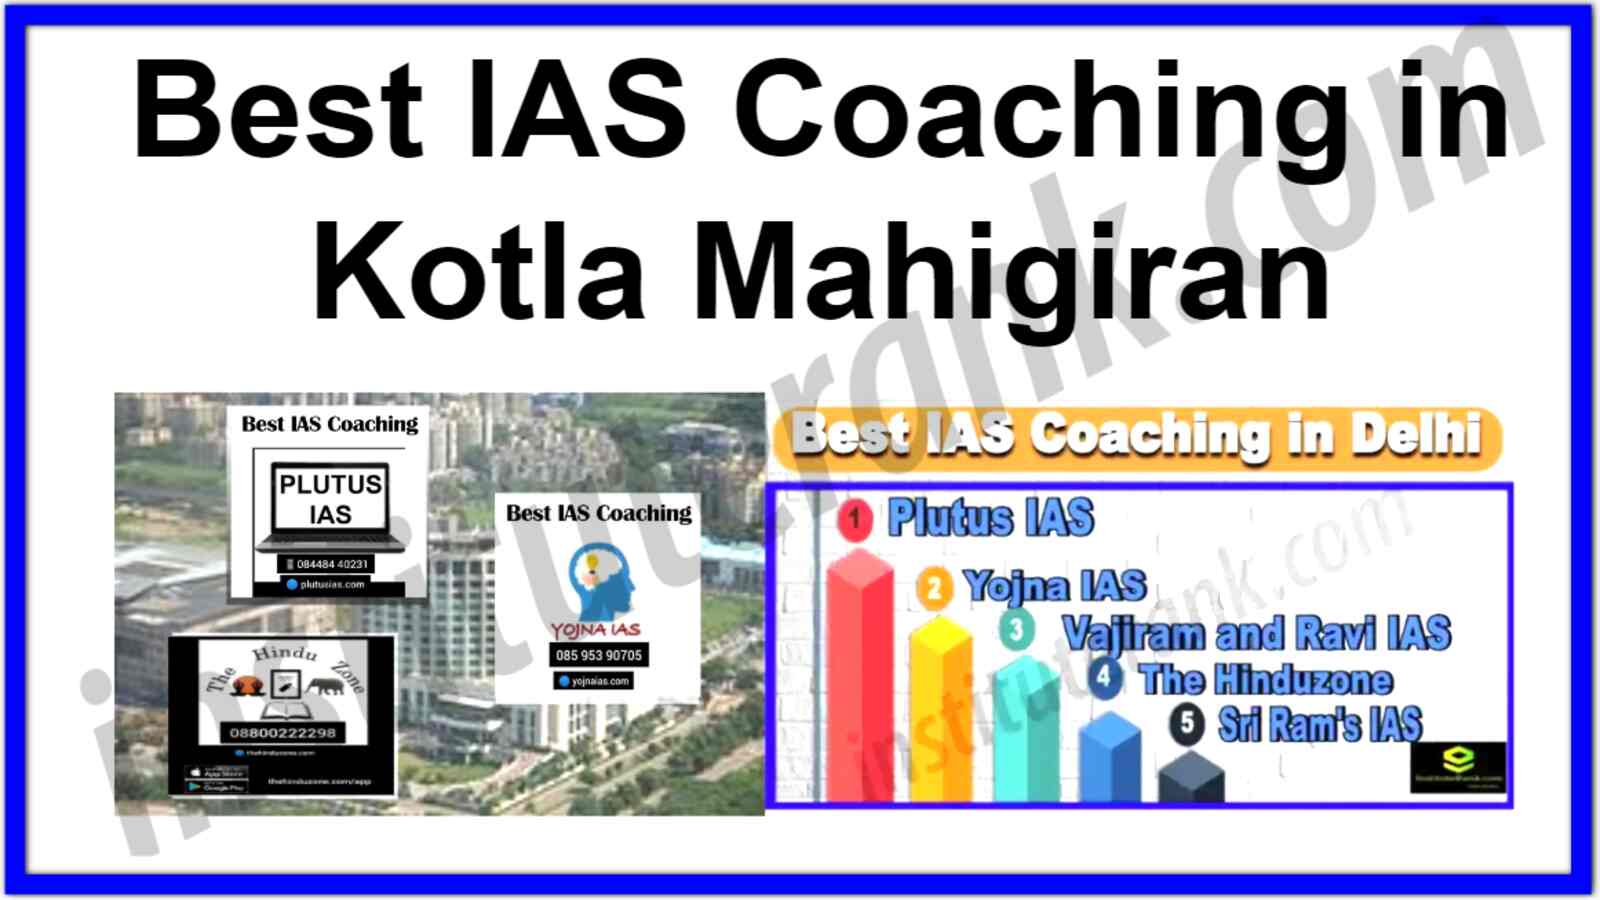 Best IAS Coaching in Kotla Mahigiran